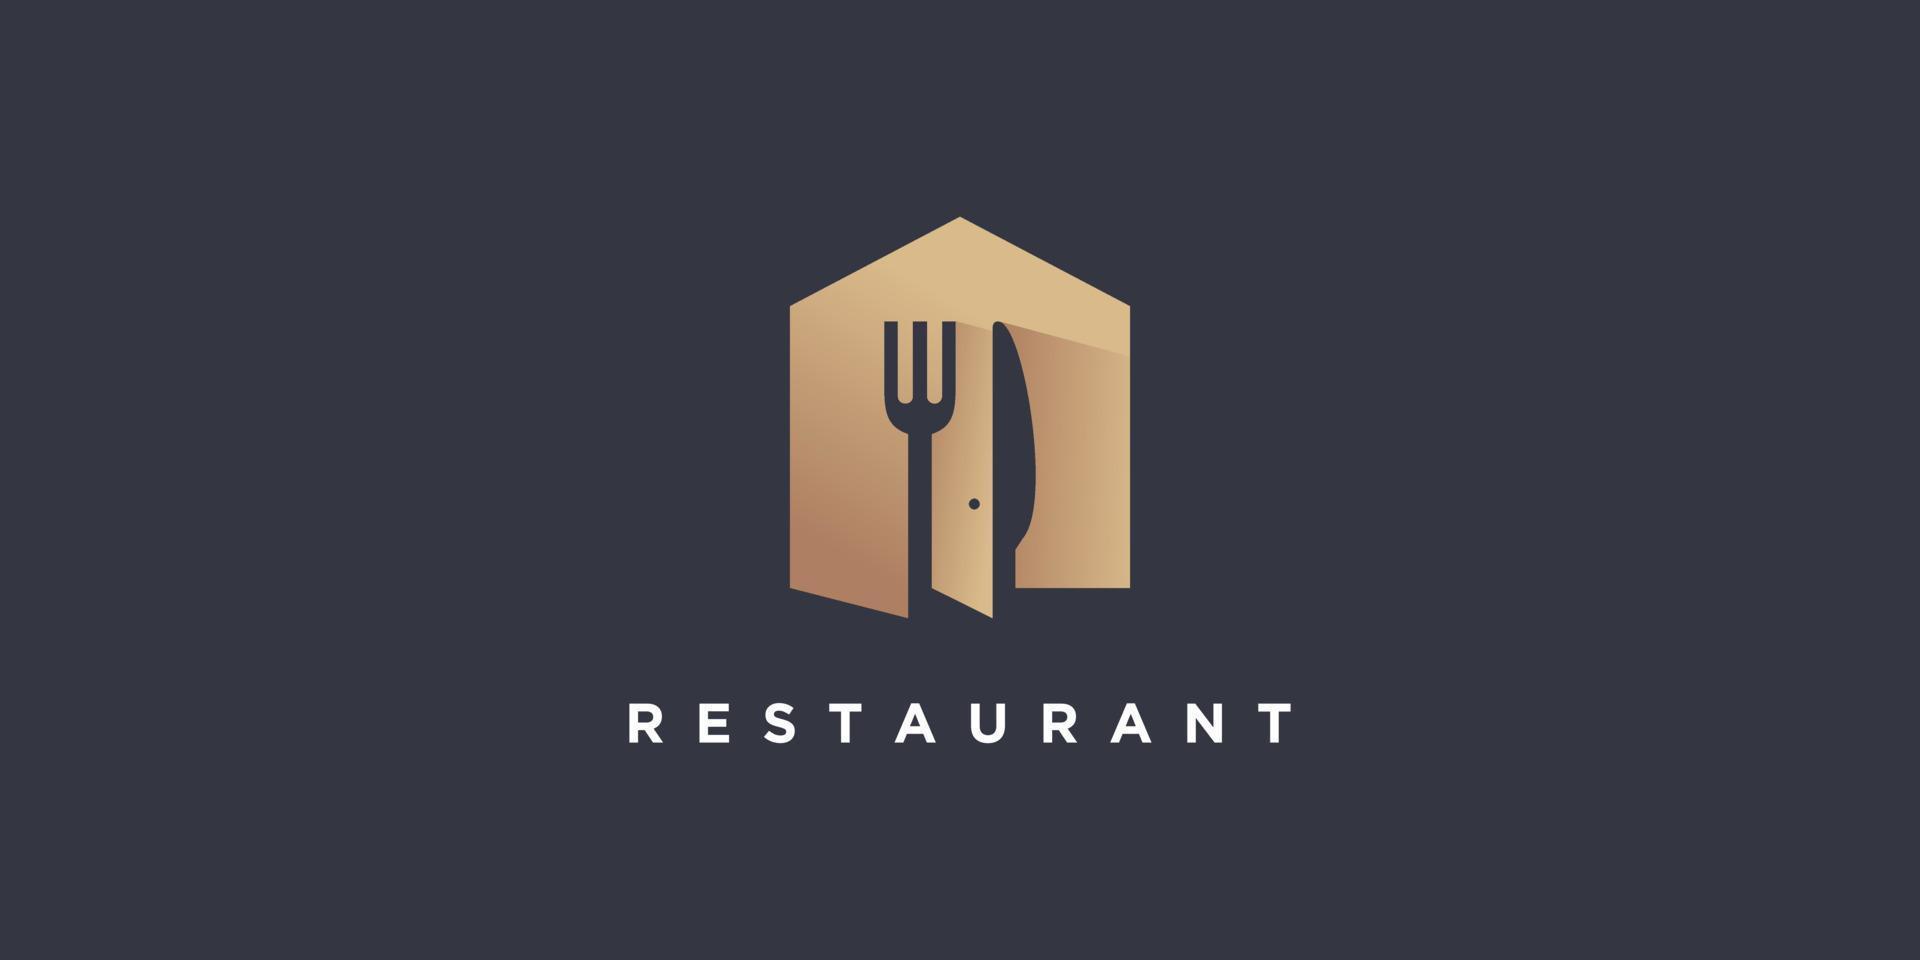 Food house logo design with modern concept Premium Vector